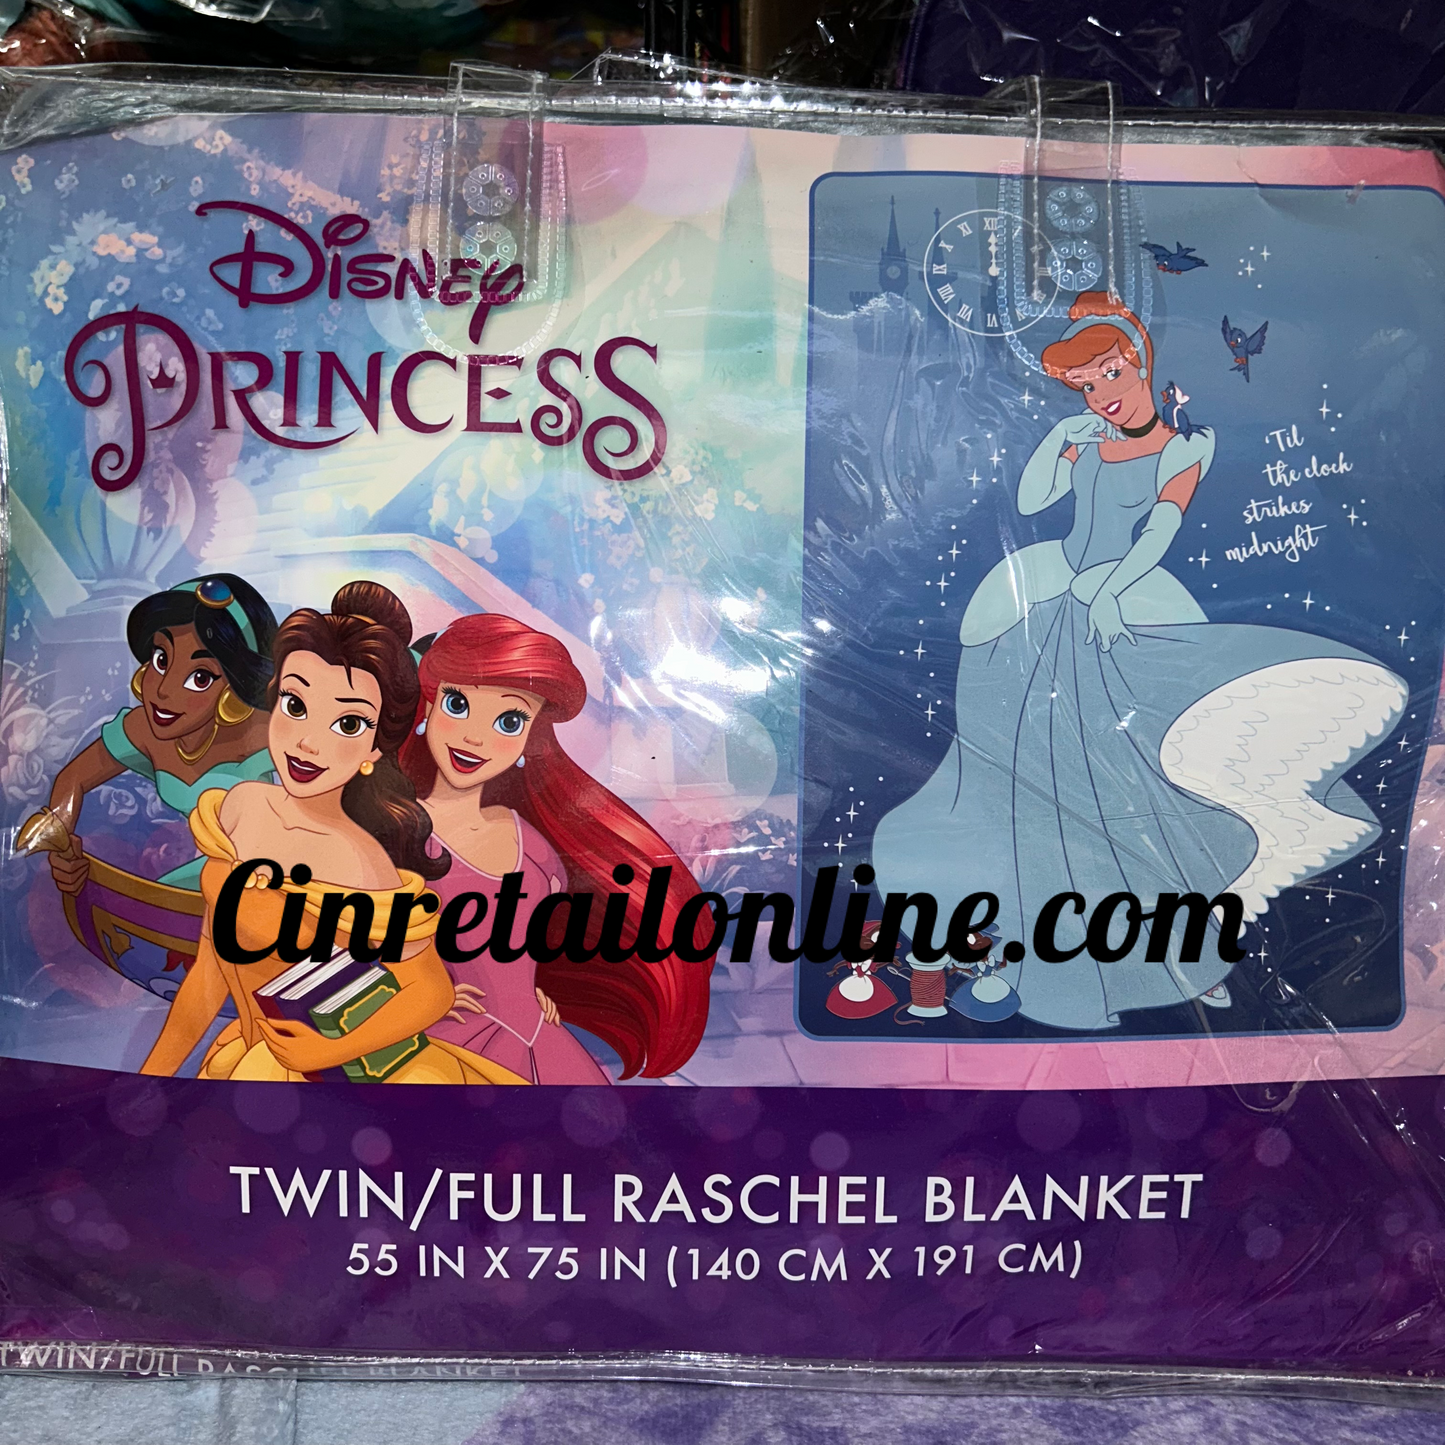 Cinderella twin/full blanket